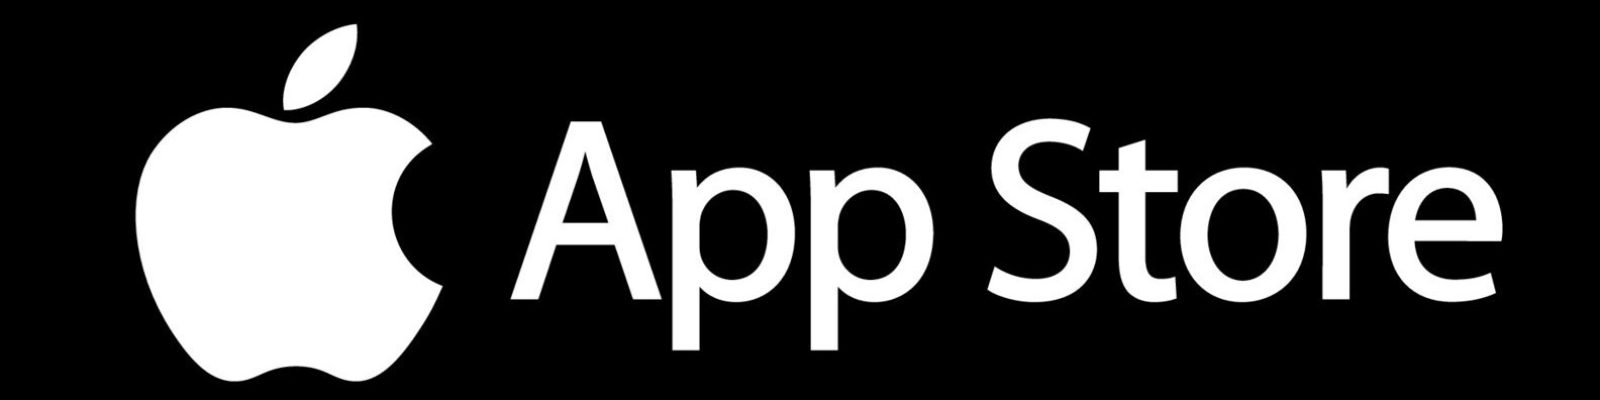 app-store-apple-phone-symbol-logo-icon-white-design-illustration-with-black-background-free-vector